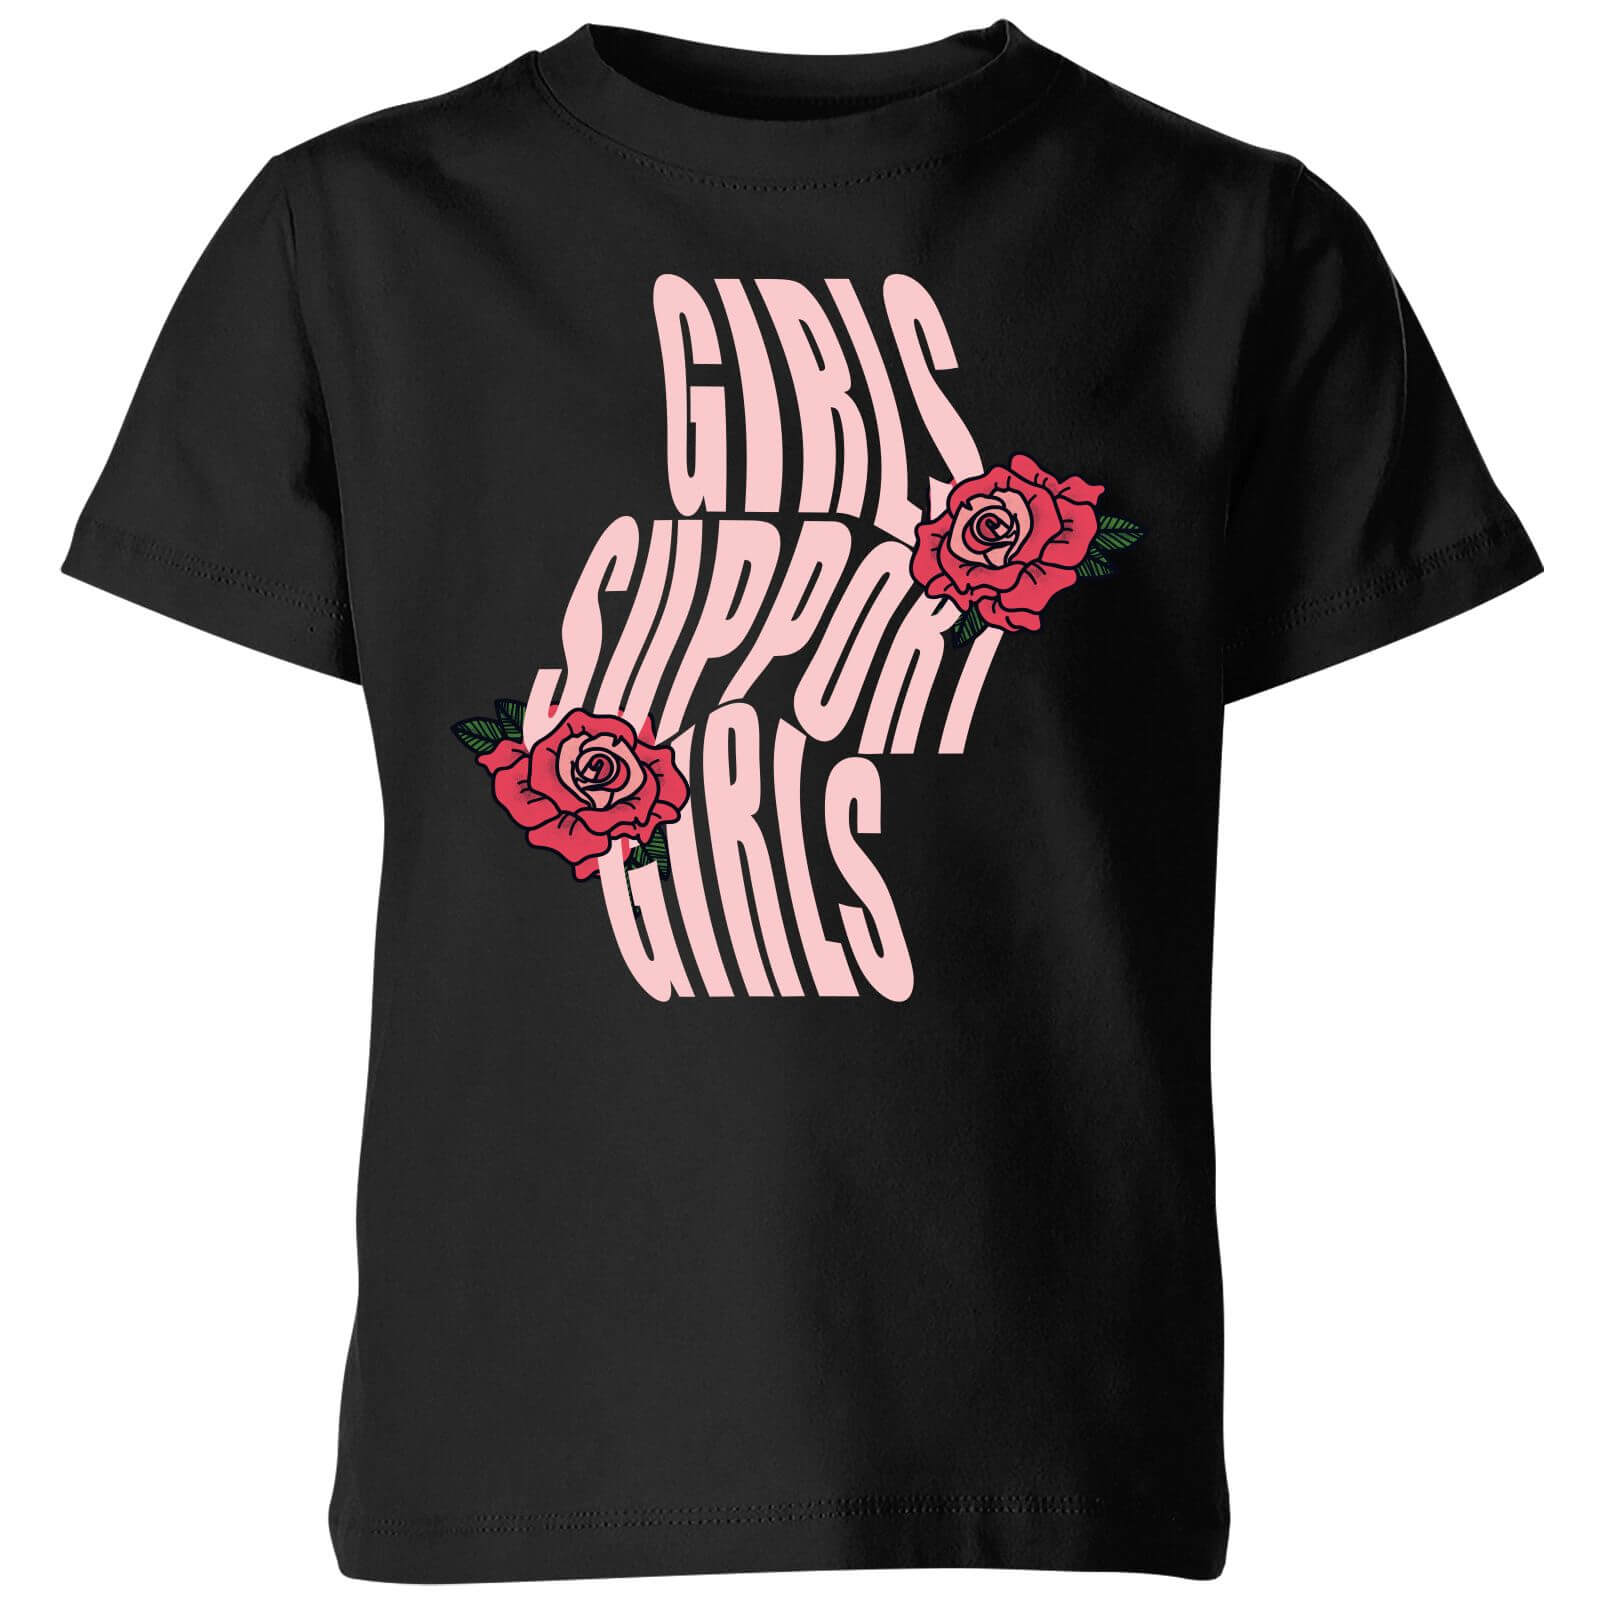 Girls Support Girls Kids' T-Shirt - Black - 3-4 Years - Black